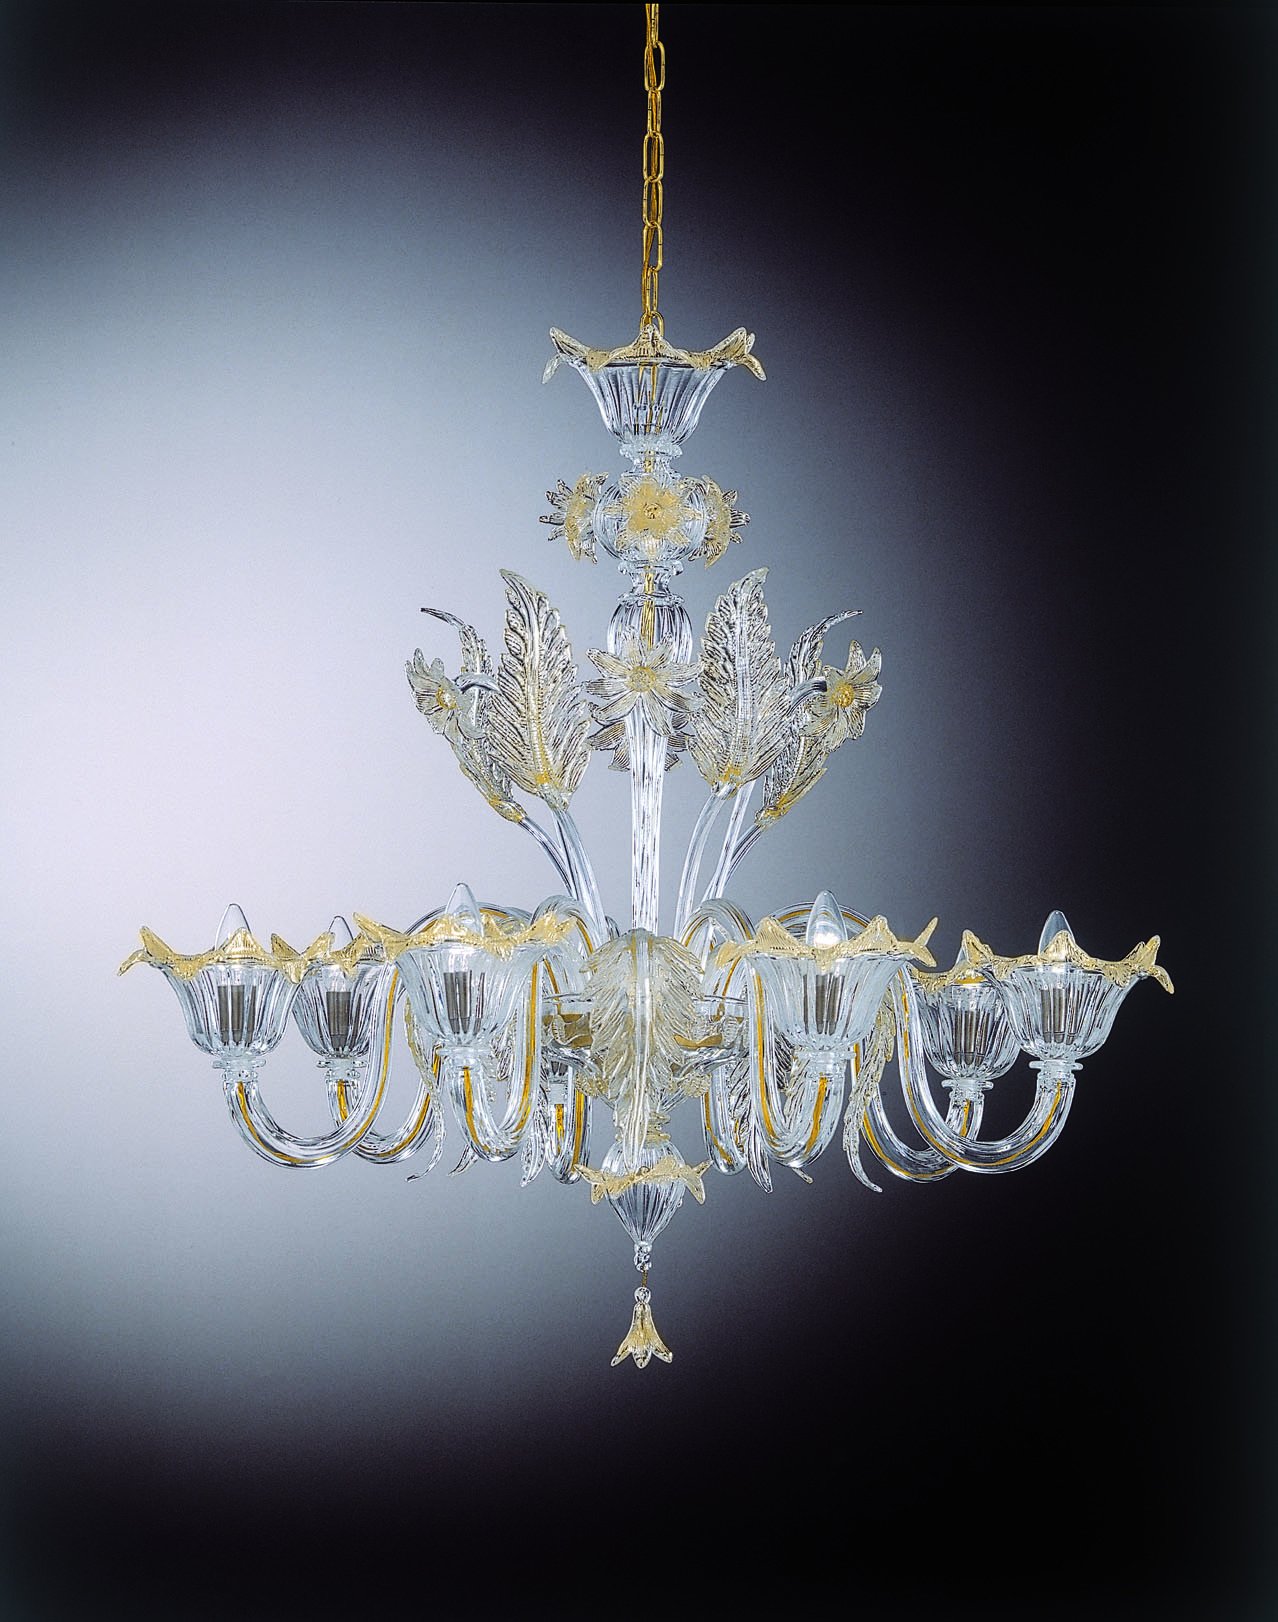 Gold Crystal Venetian Glass Chandelier “Da Vinci” With 8 Lights